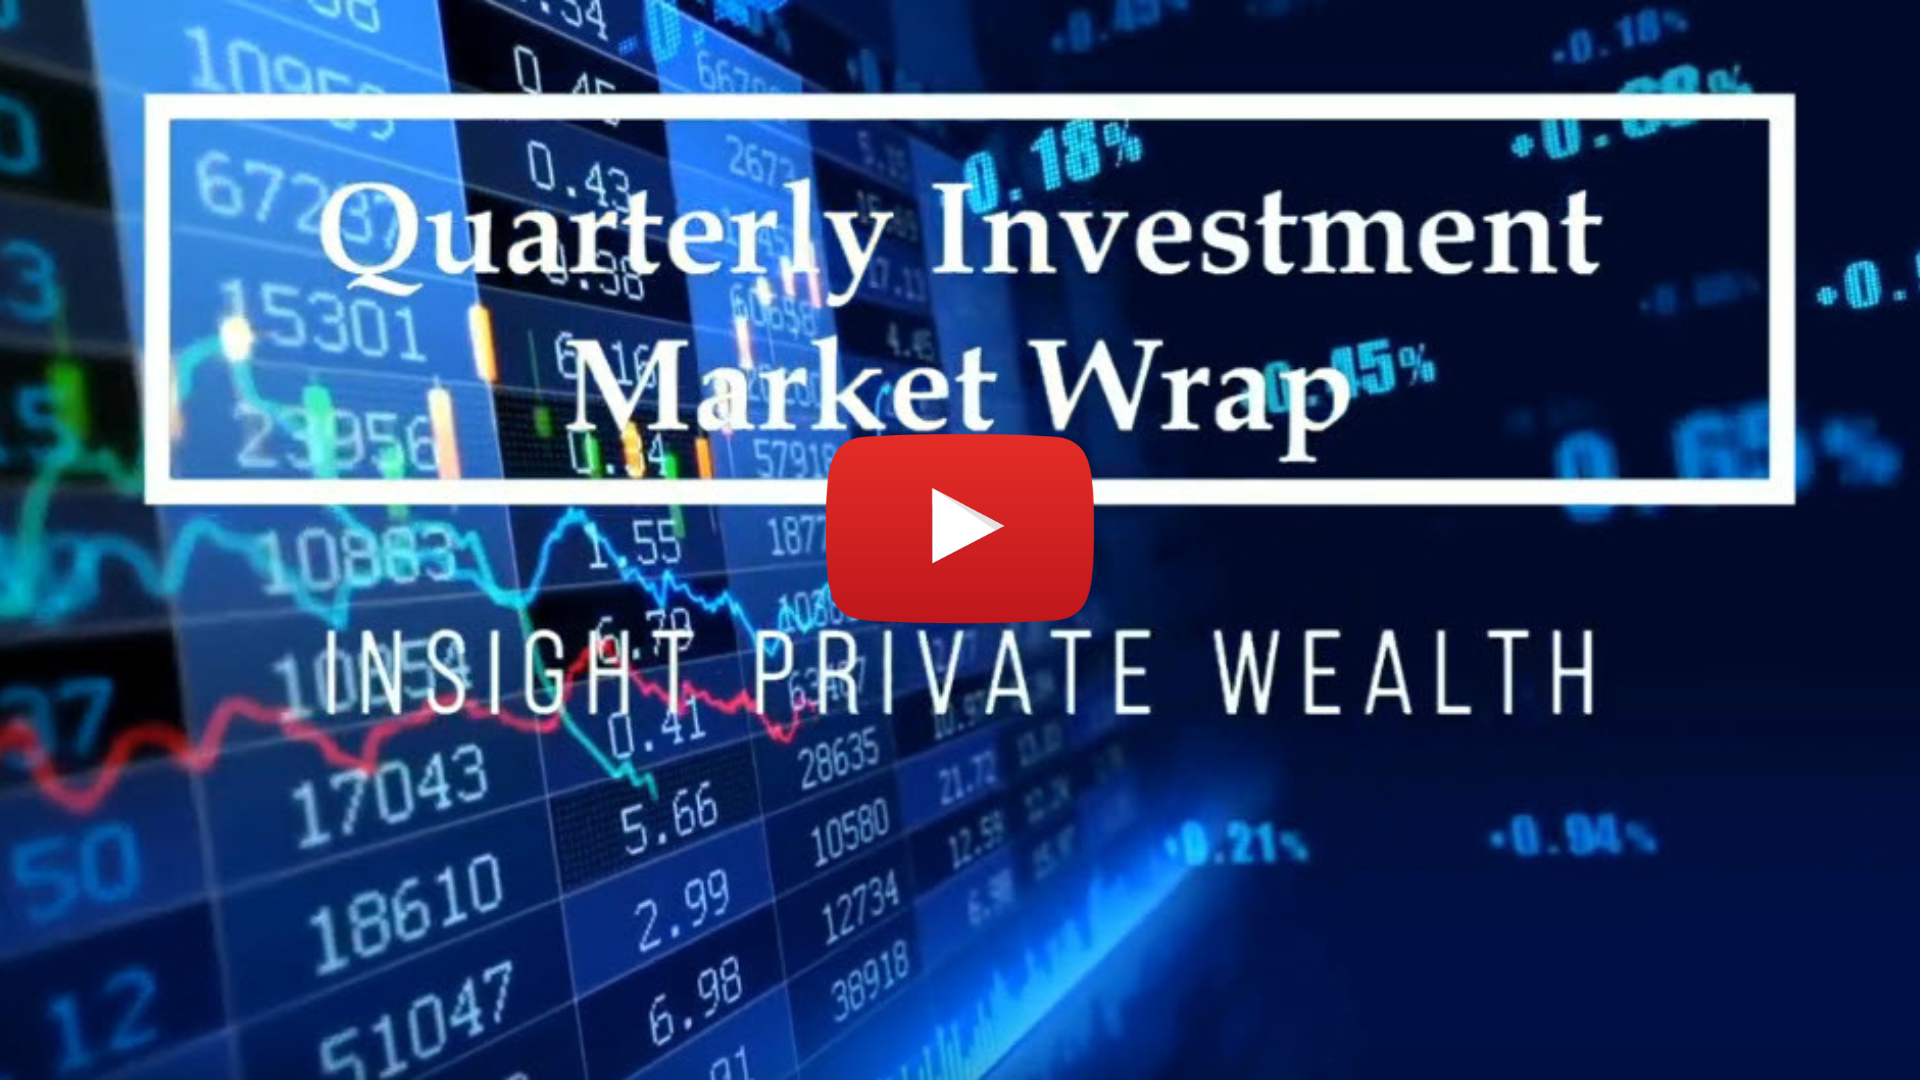 Quarterly Investment Market Wrap image1